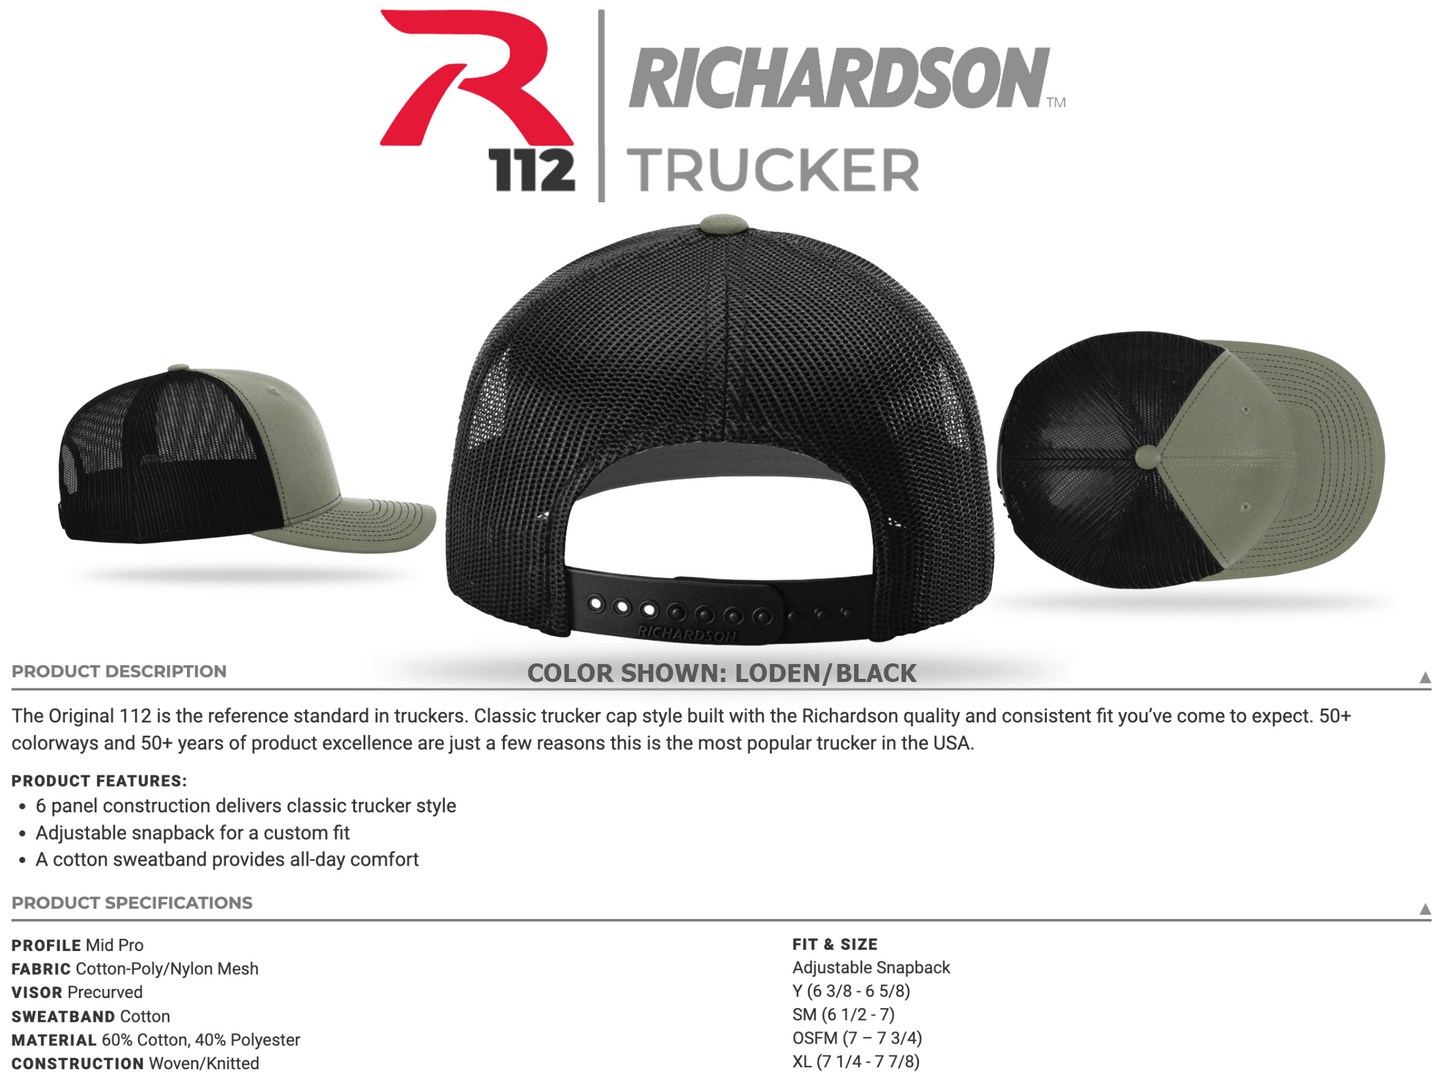 I'd Tack That Richardson 112 Trucker Mesh Back Hat